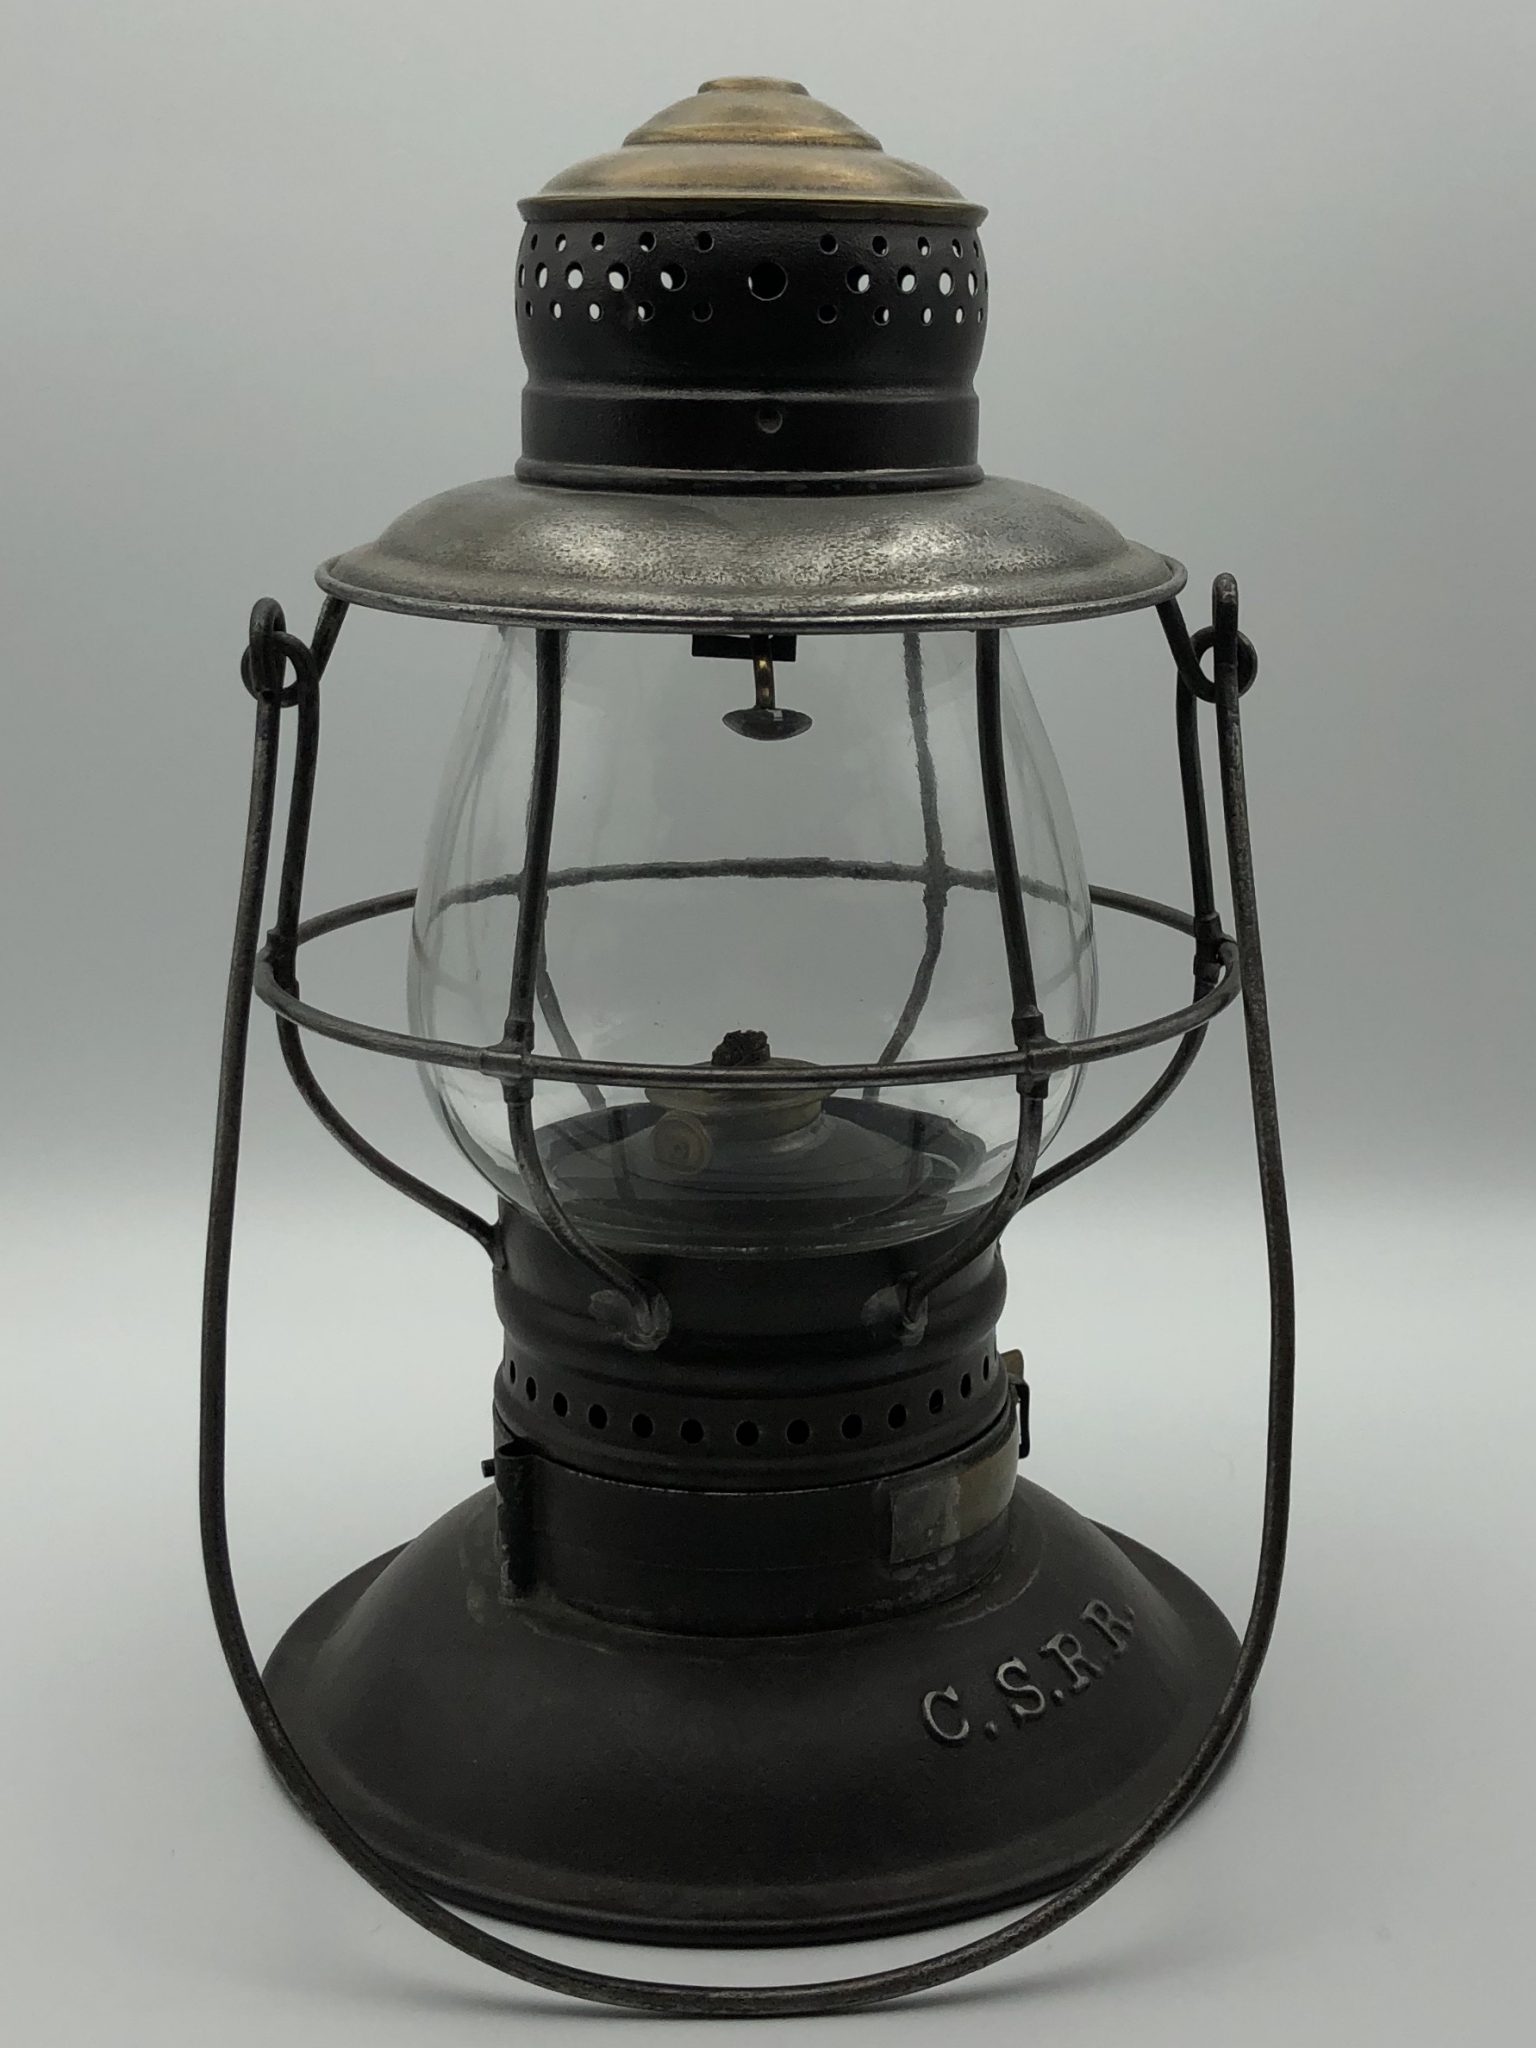 CSRR Railroad Lantern